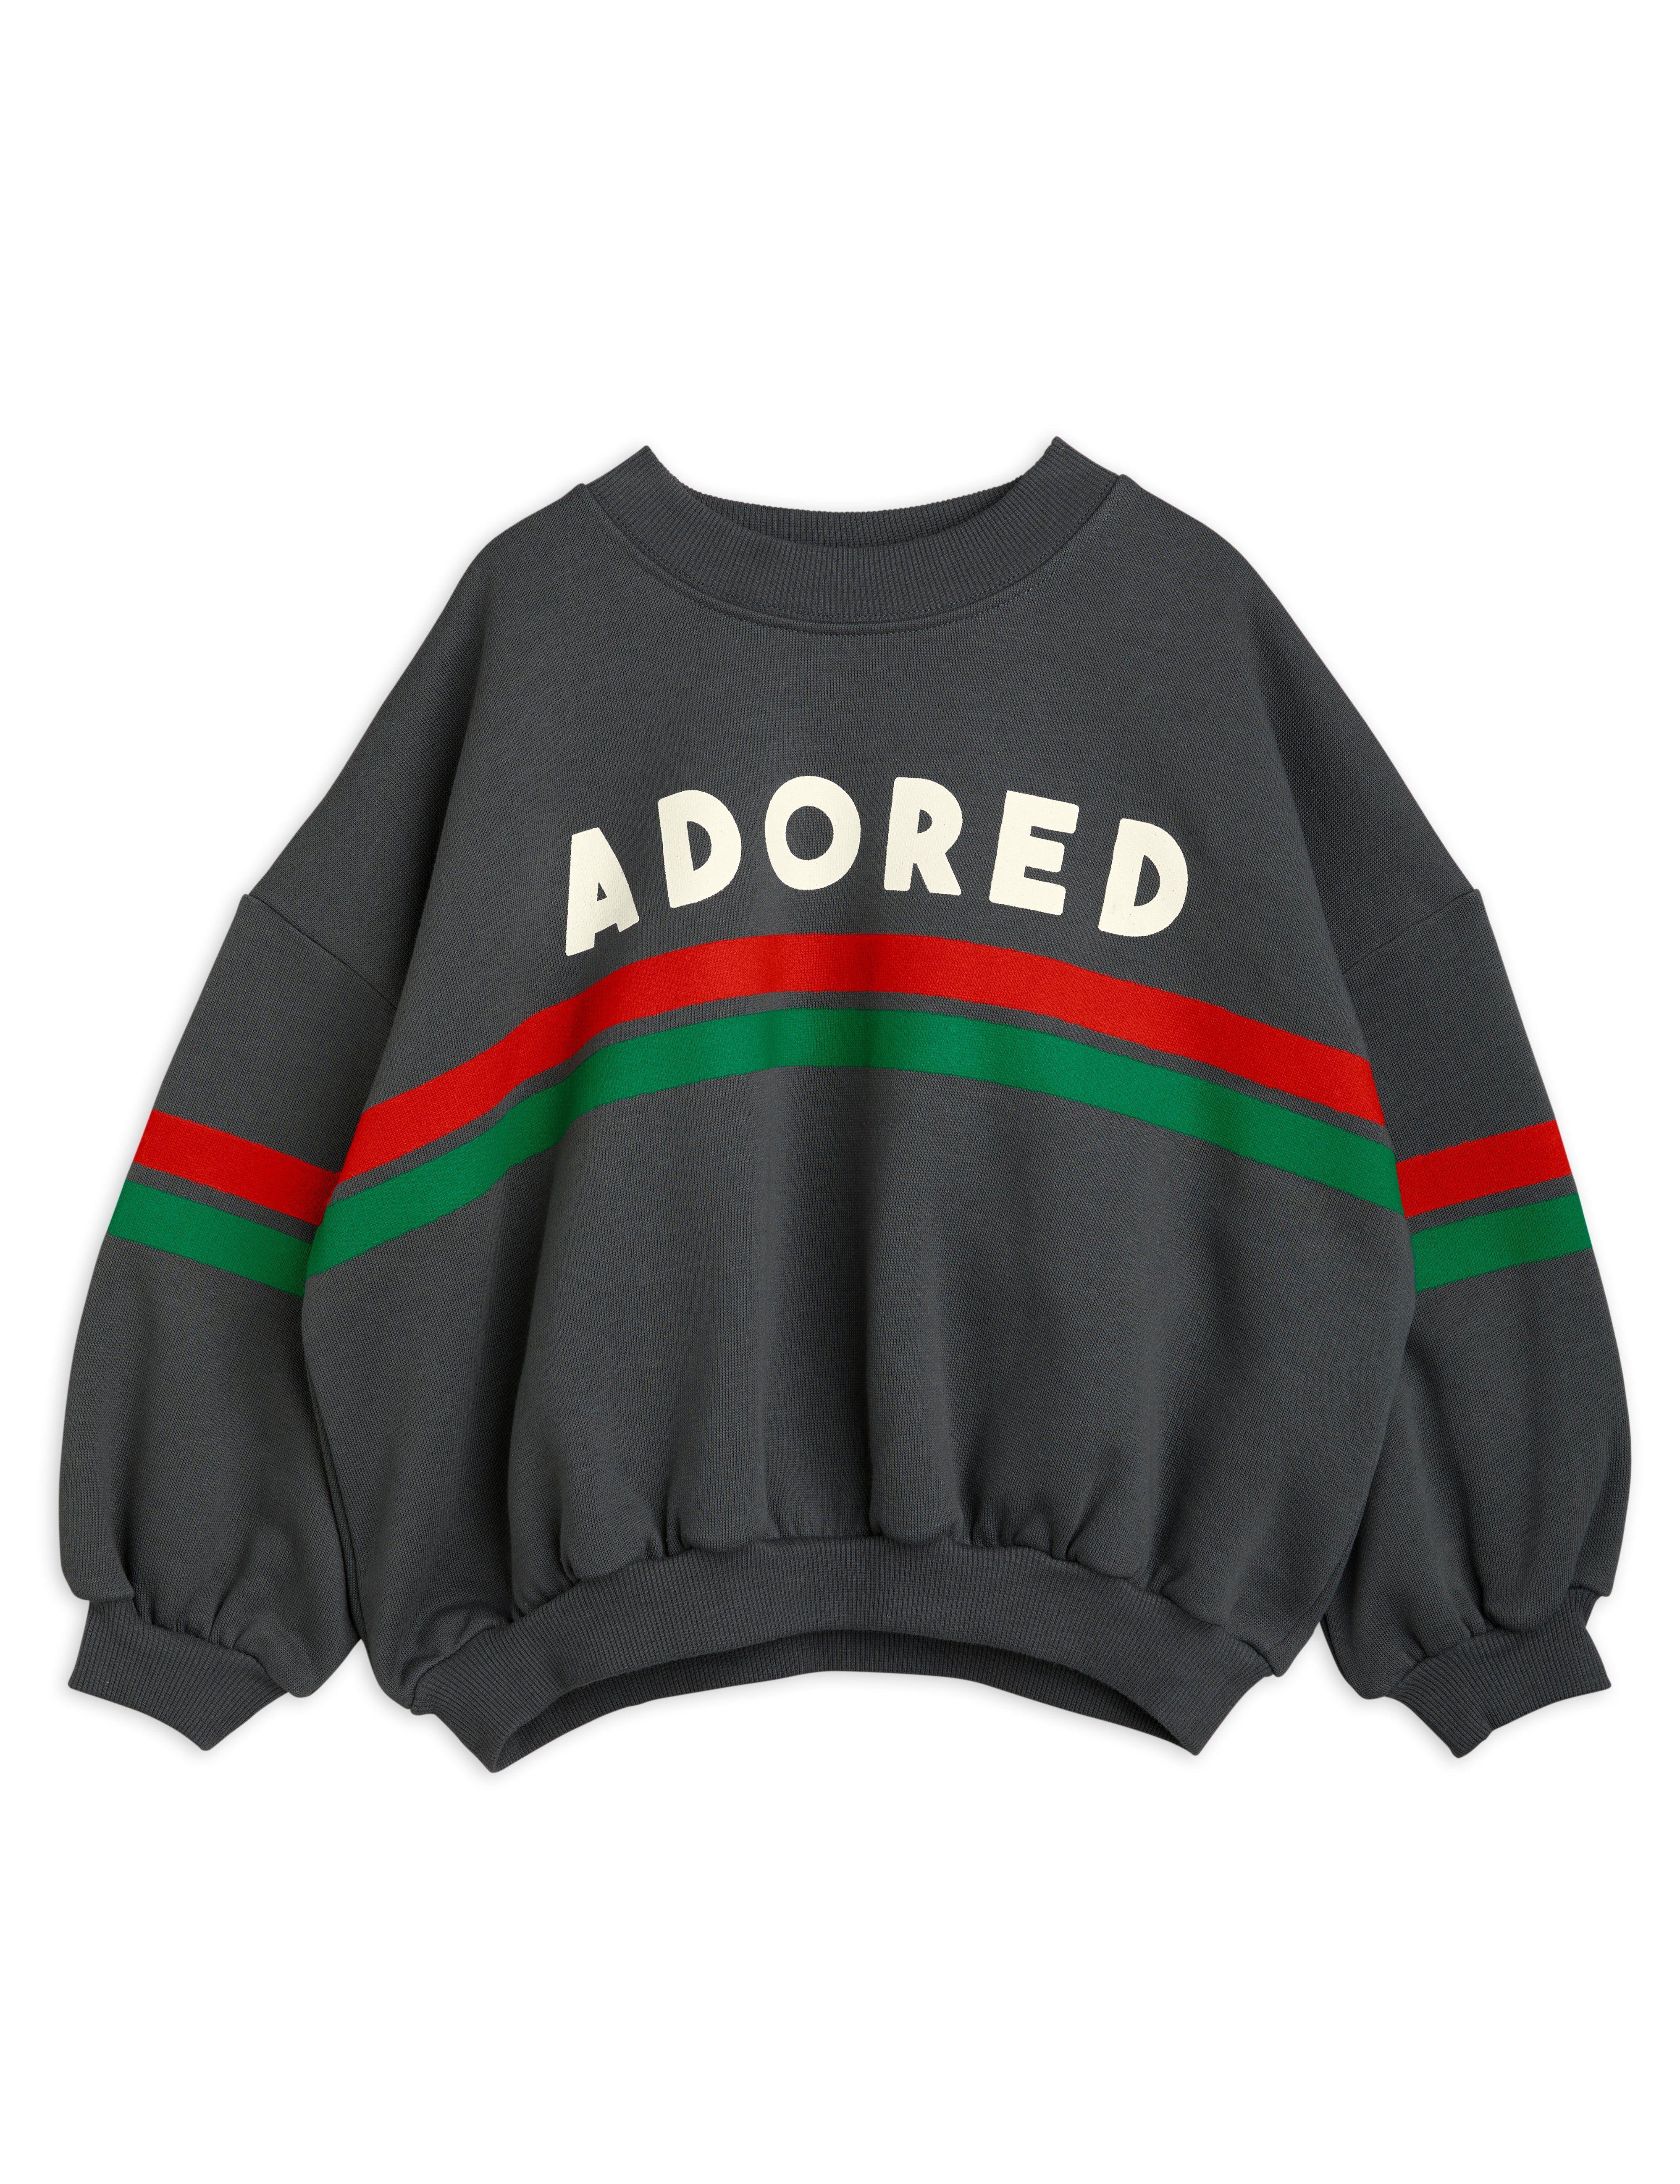 Mini Rodiniミニロディーニ | Adored sp Sweatshirt Black裏起毛